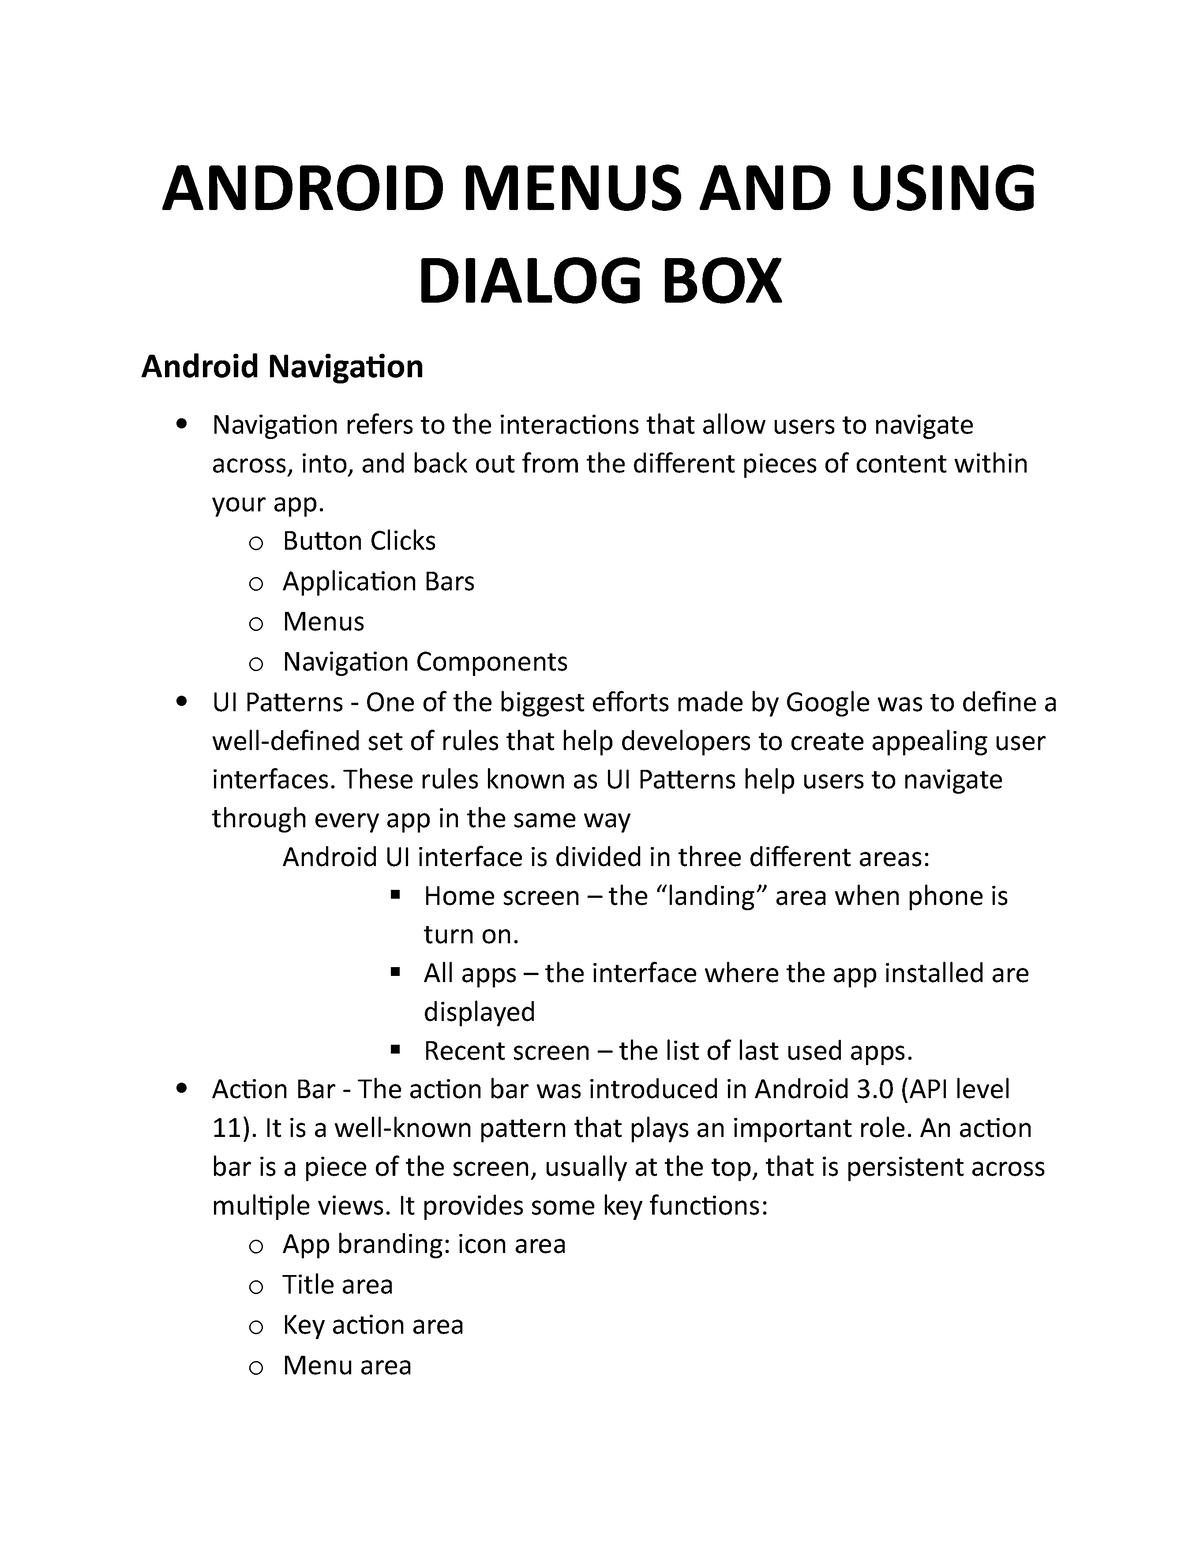 Android Menus And Using Dialog Box Android Menus And Using Dialog Box